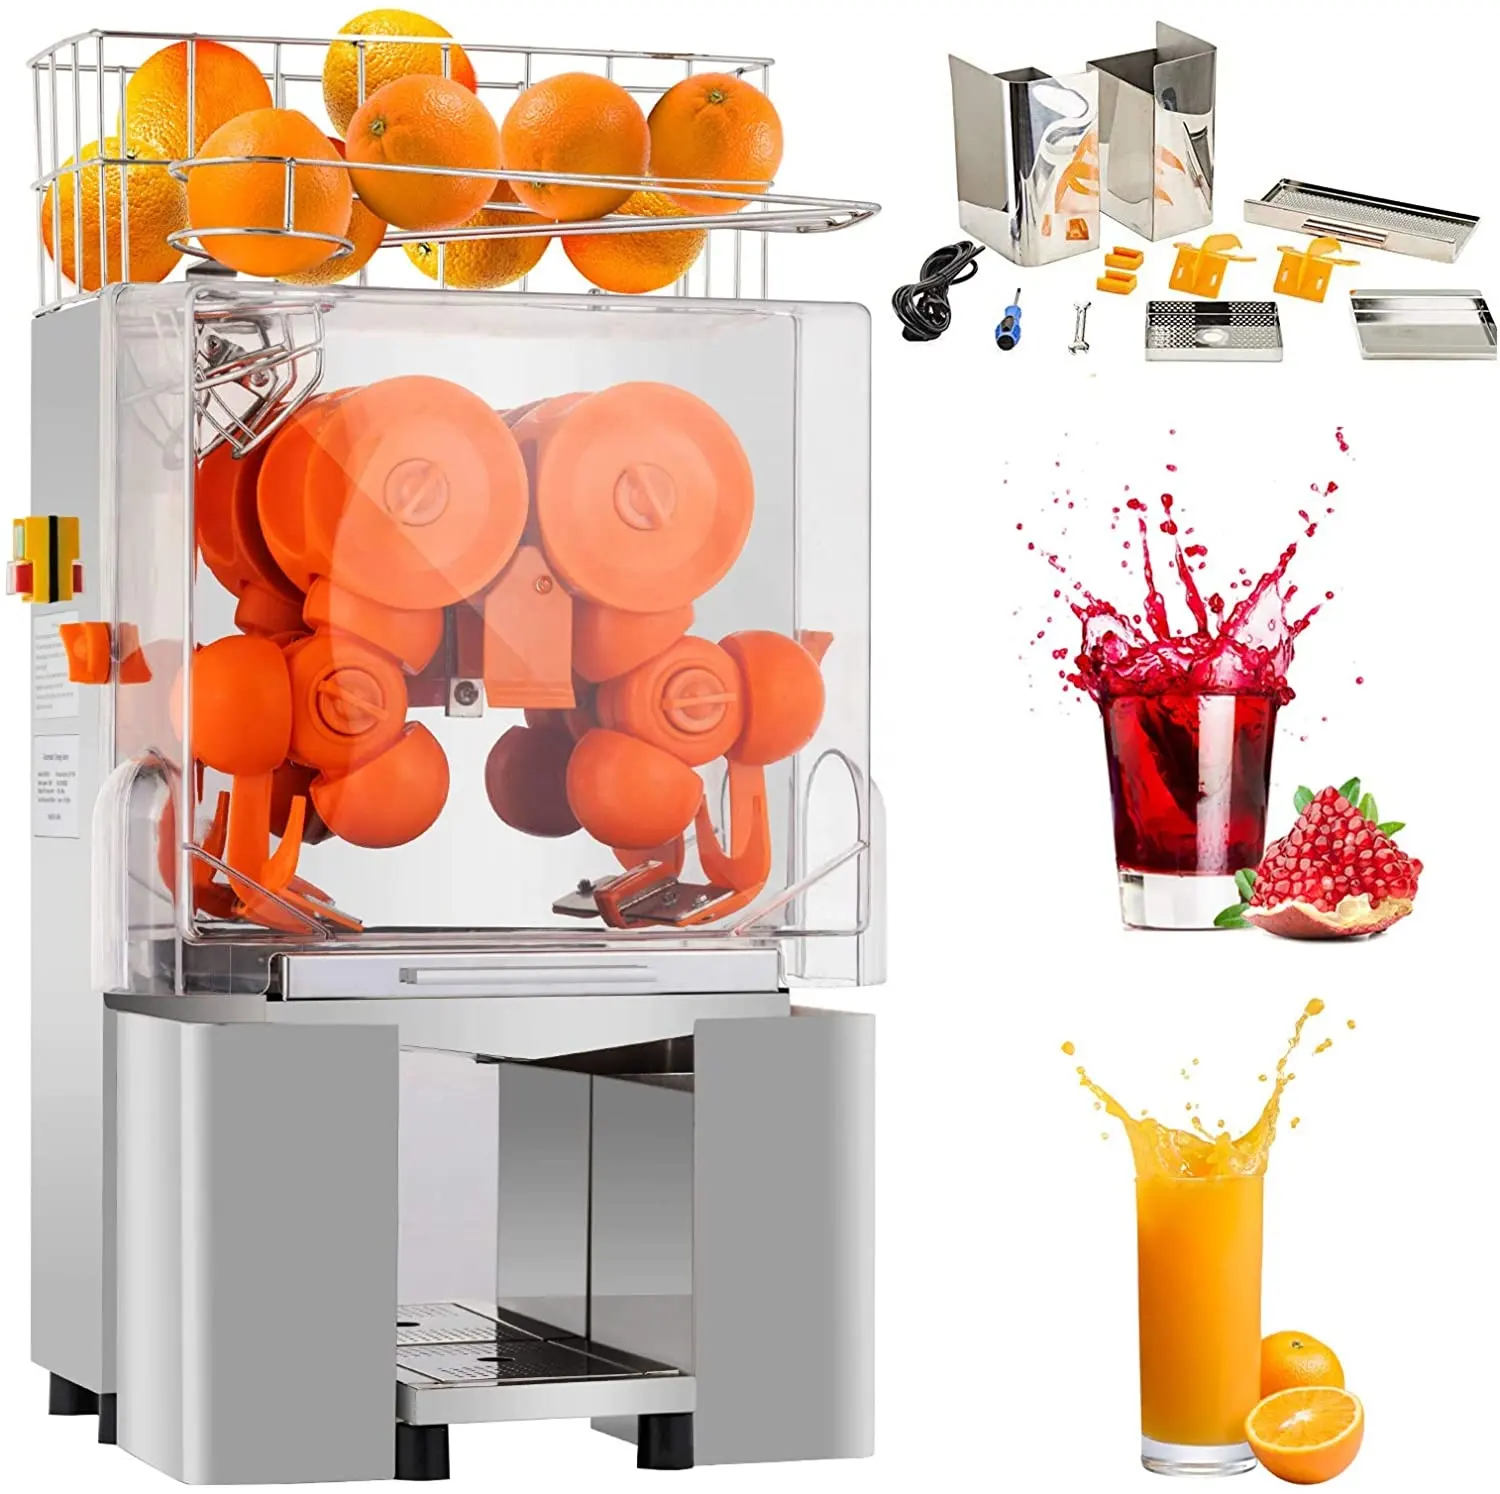 Exprimidor de naranjas comercial de acero inoxidable, máquina exprimidora Automática Industrial, exprimidor de naranjas eléctrico